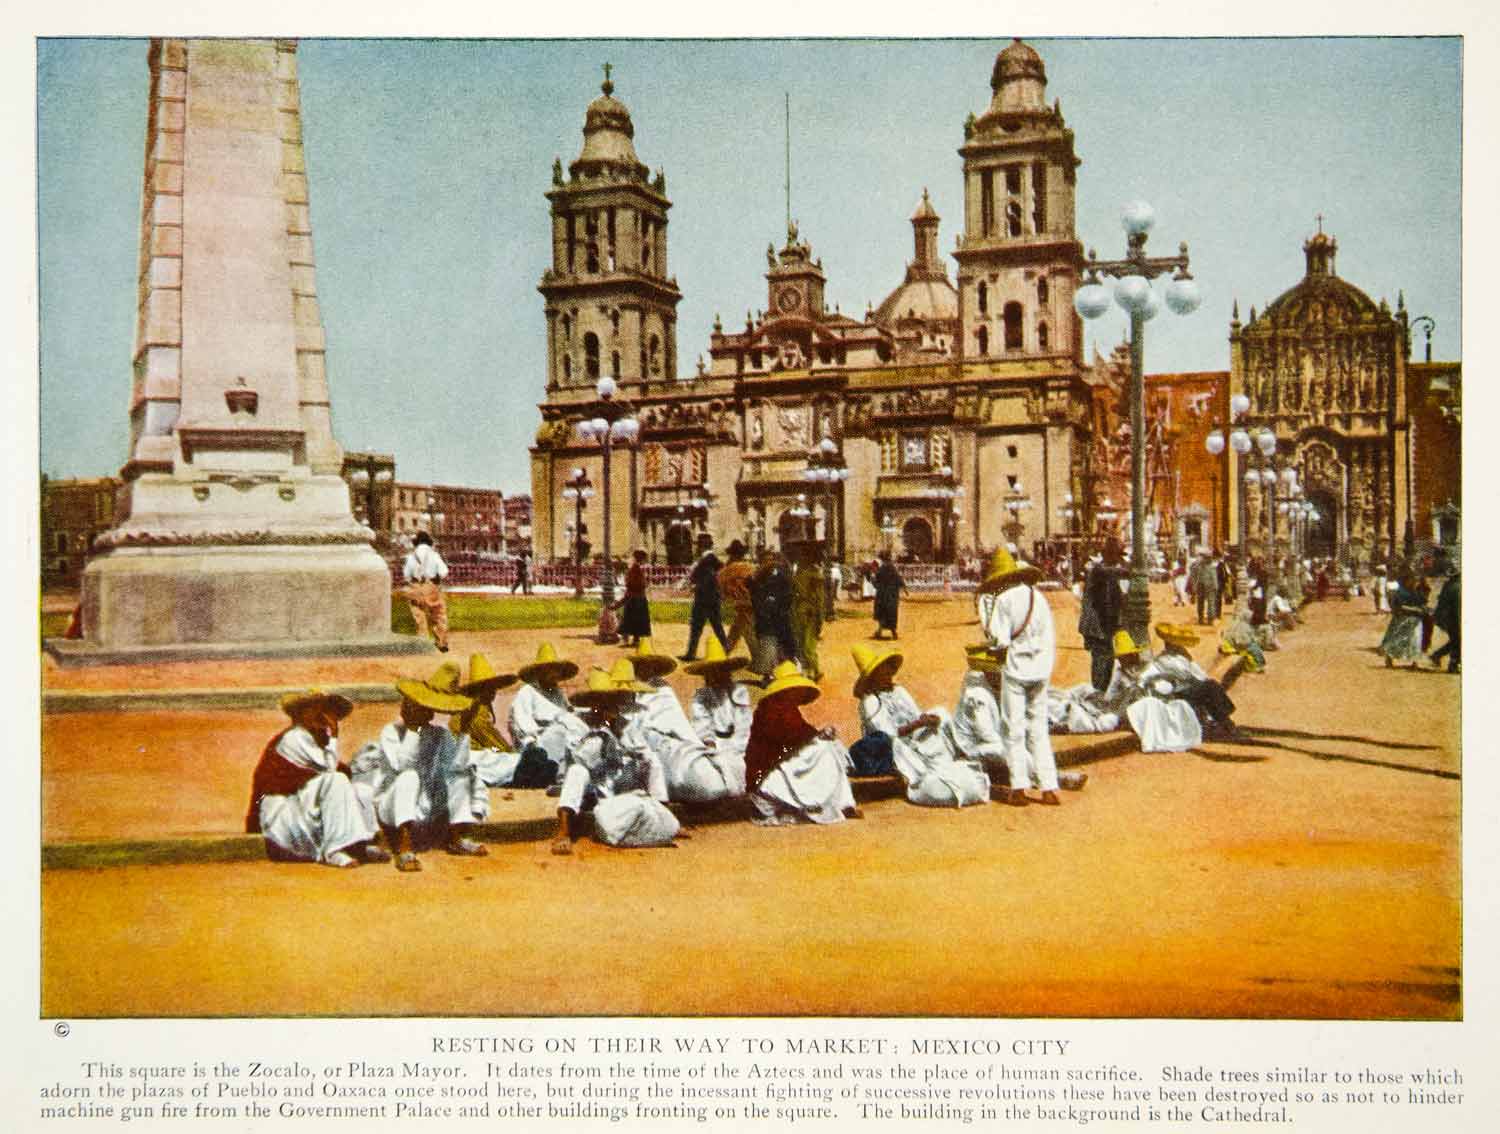 1923 Color Print Mexico City Zocalo Plaza Mayor Cathedral Historical Image NGMA1